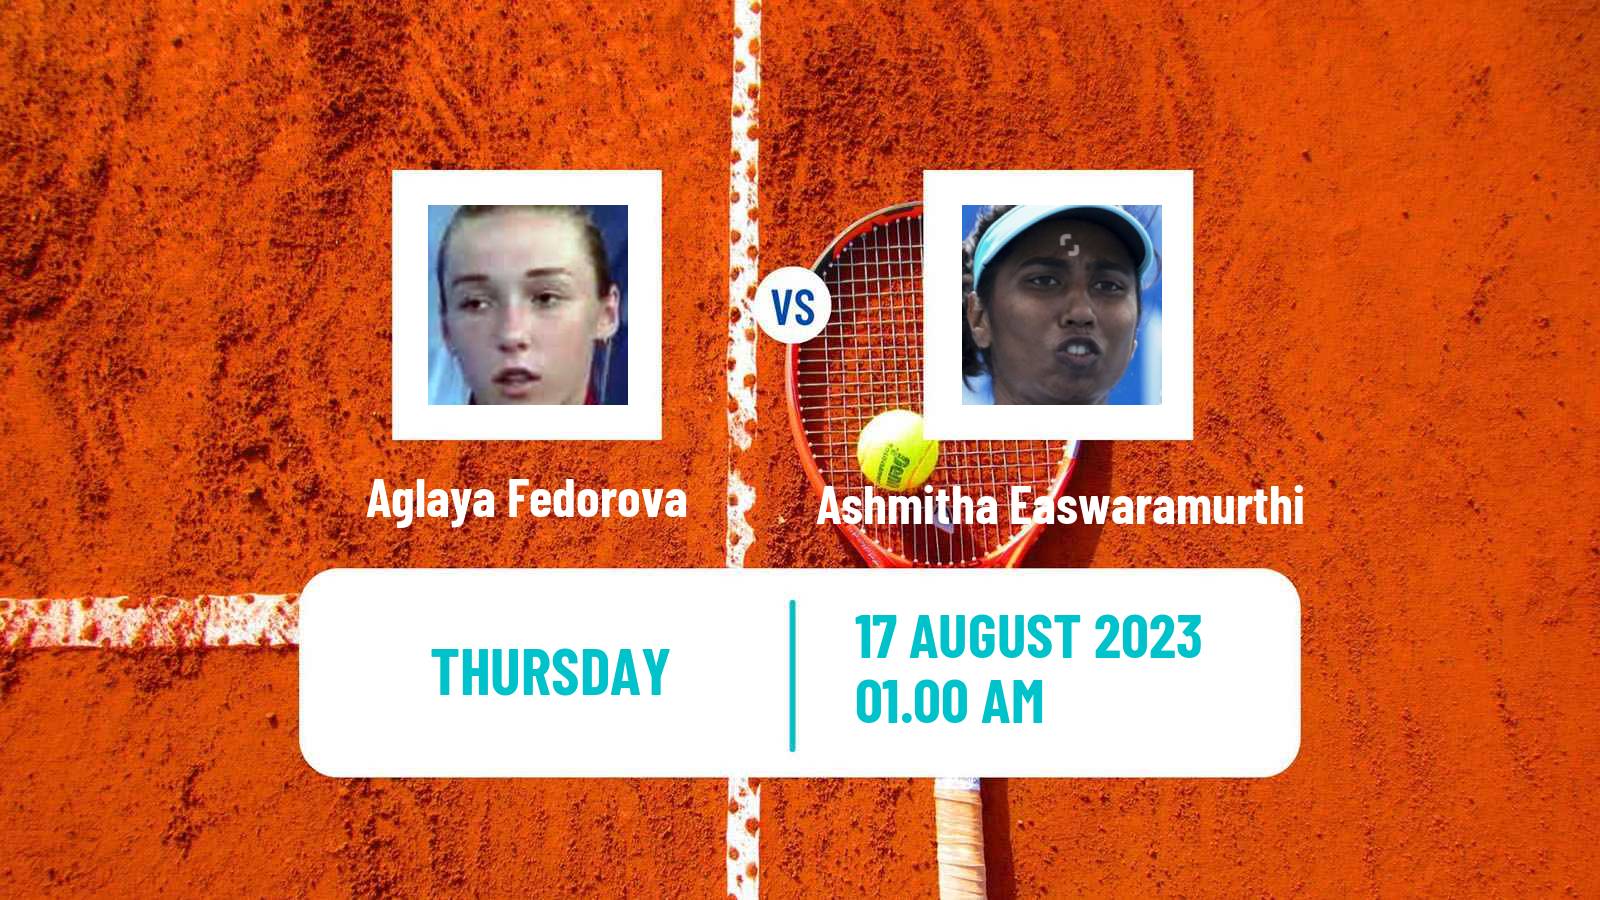 Tennis ITF W15 Ust Kamenogorsk 2 Women Aglaya Fedorova - Ashmitha Easwaramurthi